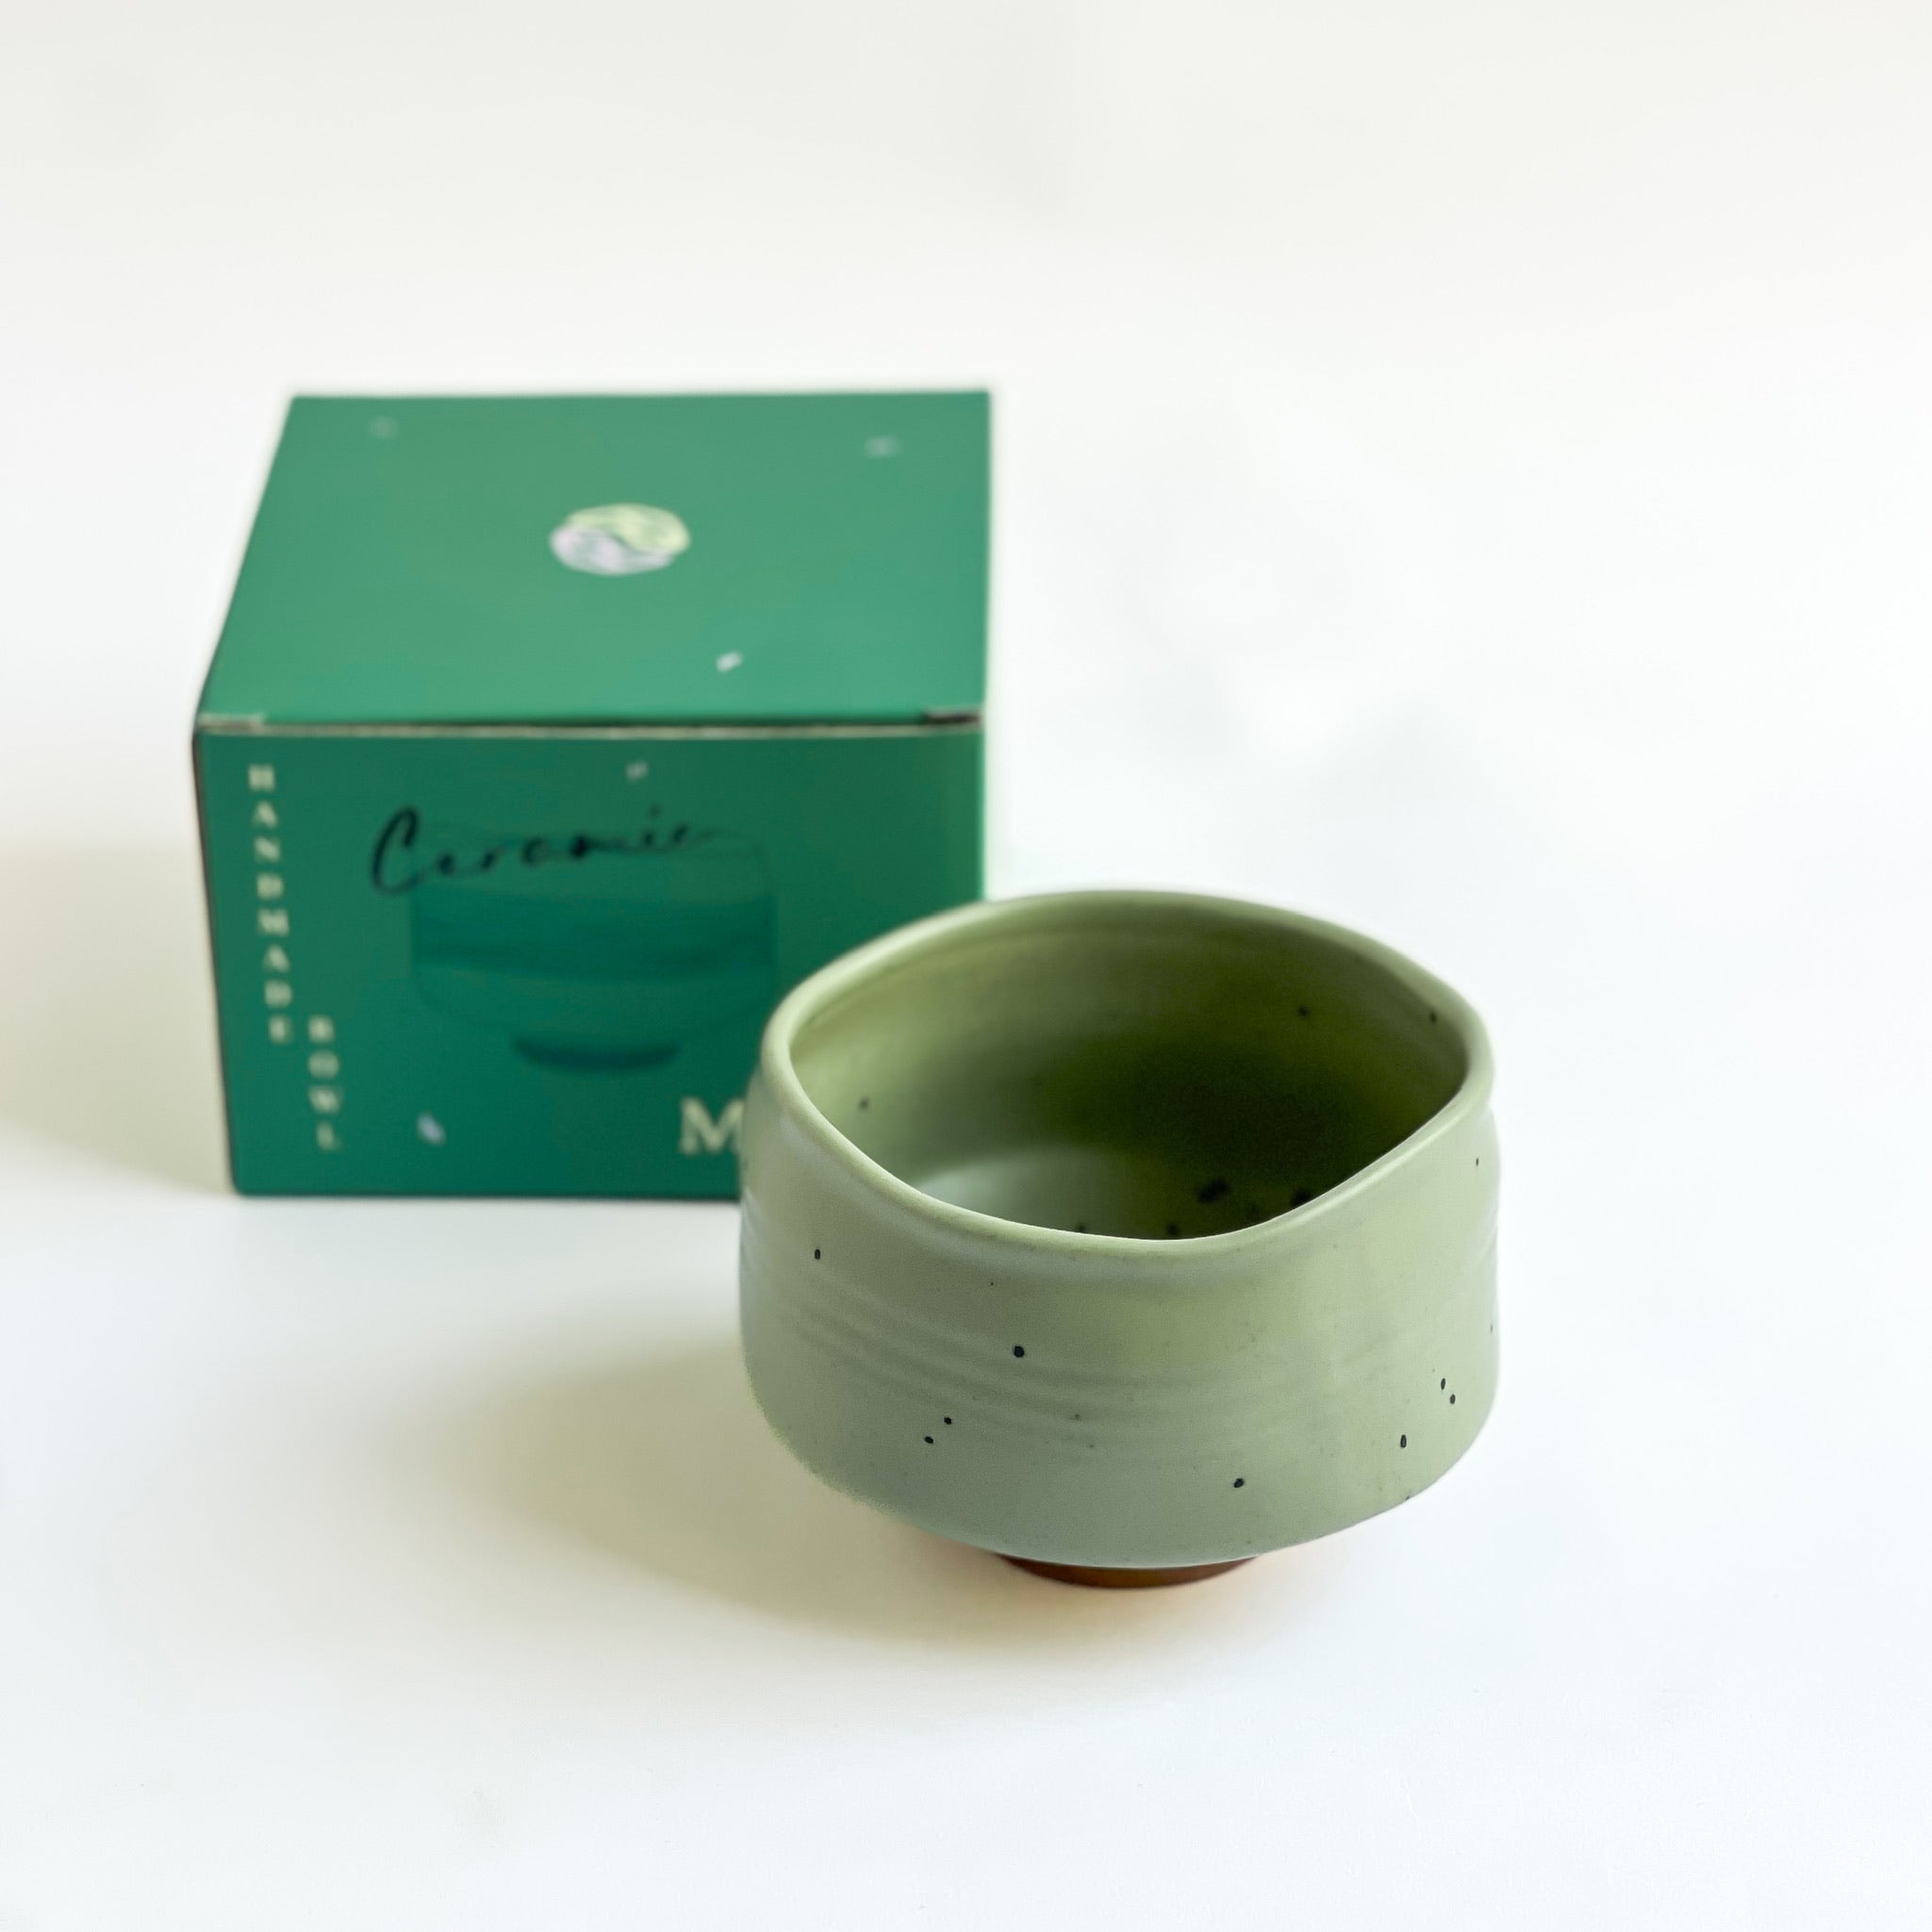 handmade green matcha bowl next to MaChii Tea box